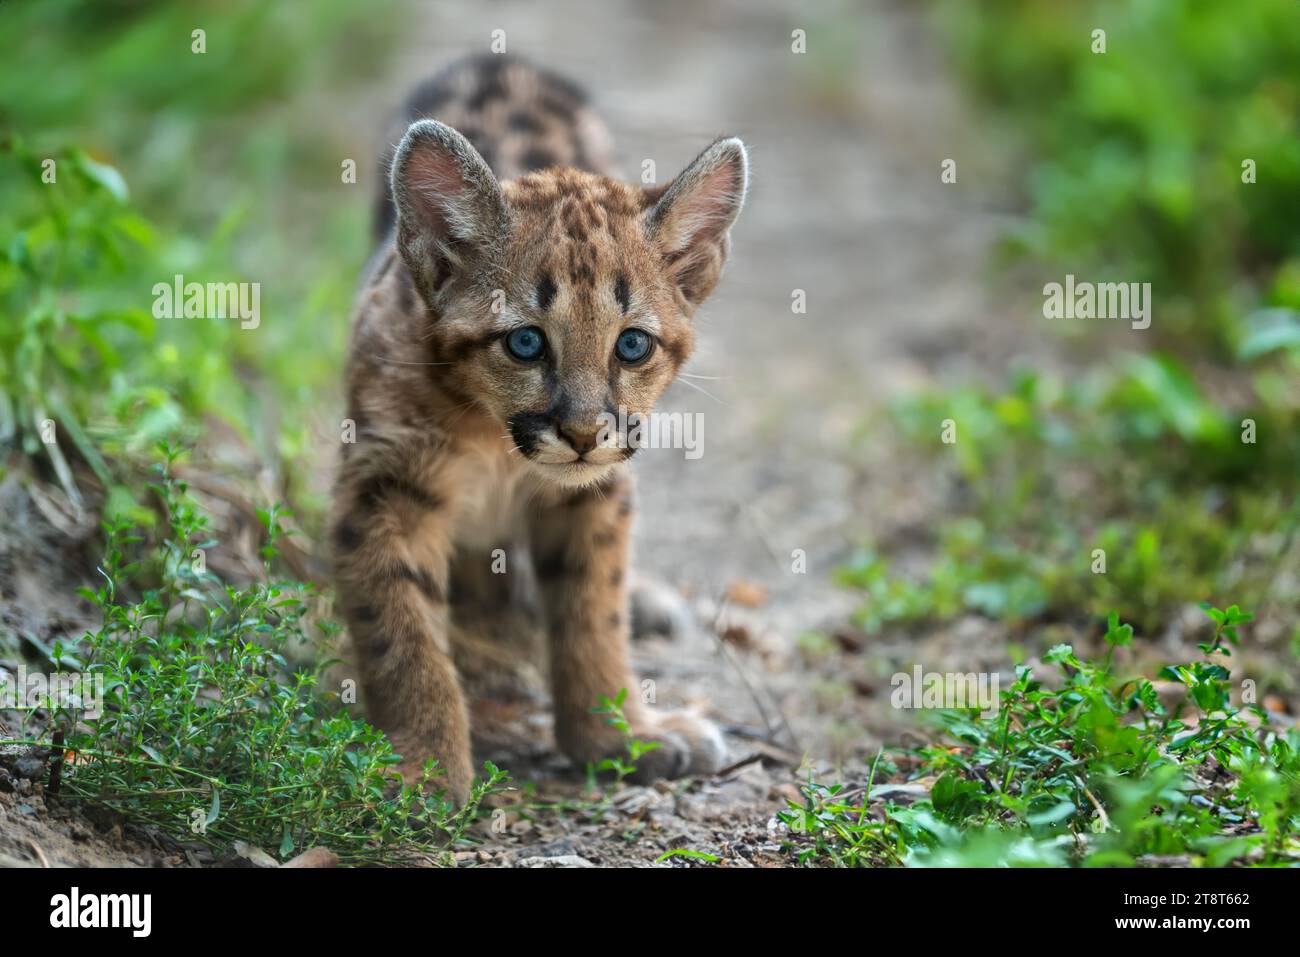 Portrait baby cougar, mountain lion or puma in nature. Animal in natural habitat. Wildlife scene Stock Photo